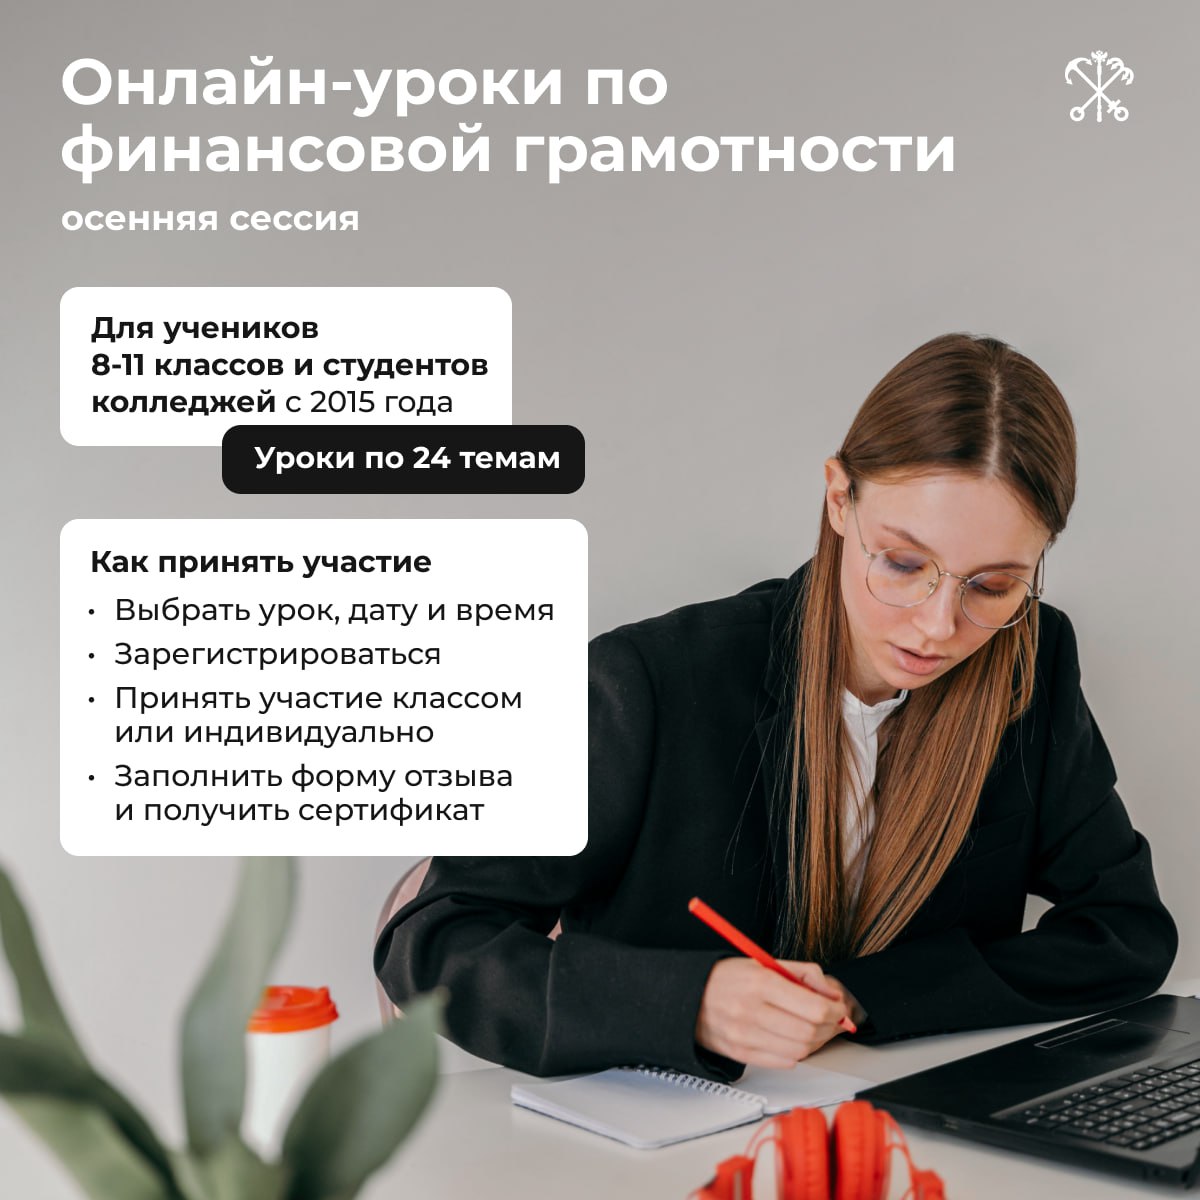 Dni FG ru уроки финансовой грамотности. Молодежь и финансы от финансовой грамотности к успеху арт. Https://dni-FG.ru.